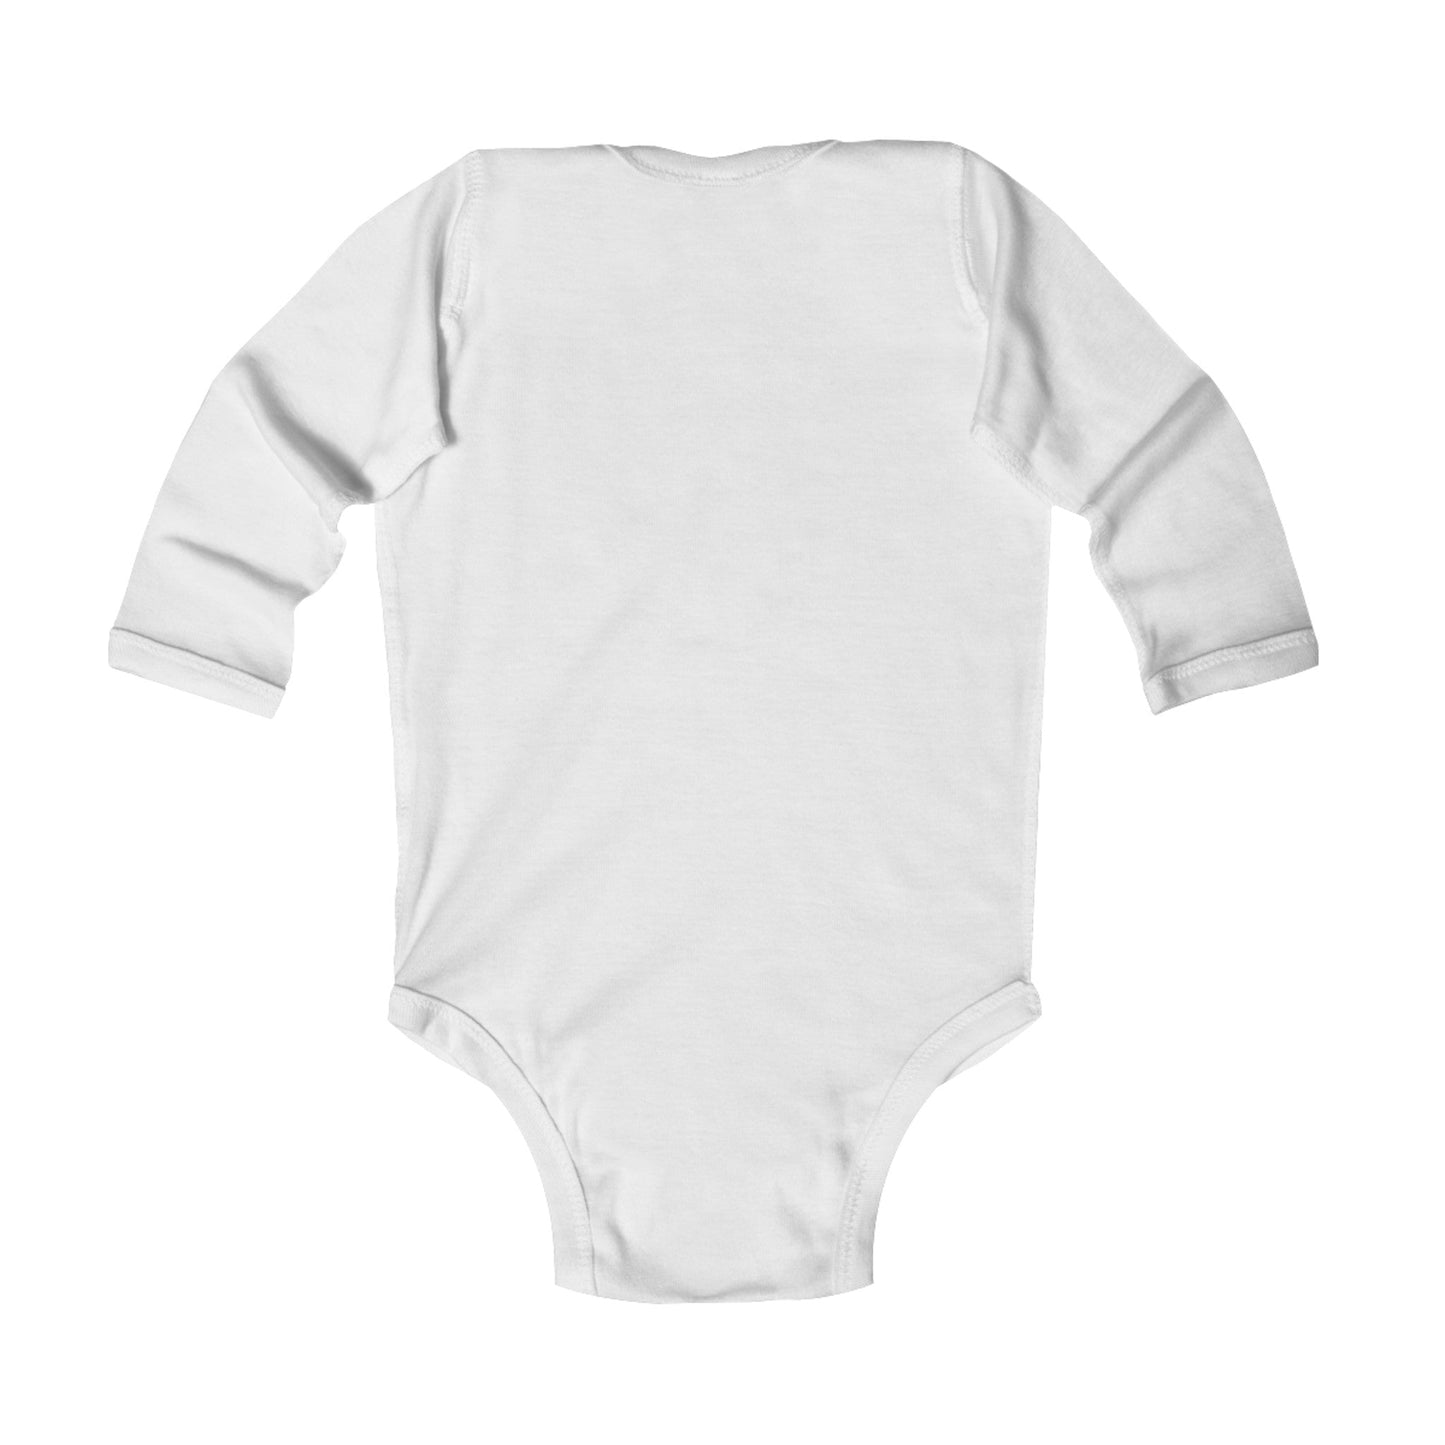 Vampire Kitties Infant Long Sleeve Bodysuit - Kids clothes - Epileptic Al’s Shop